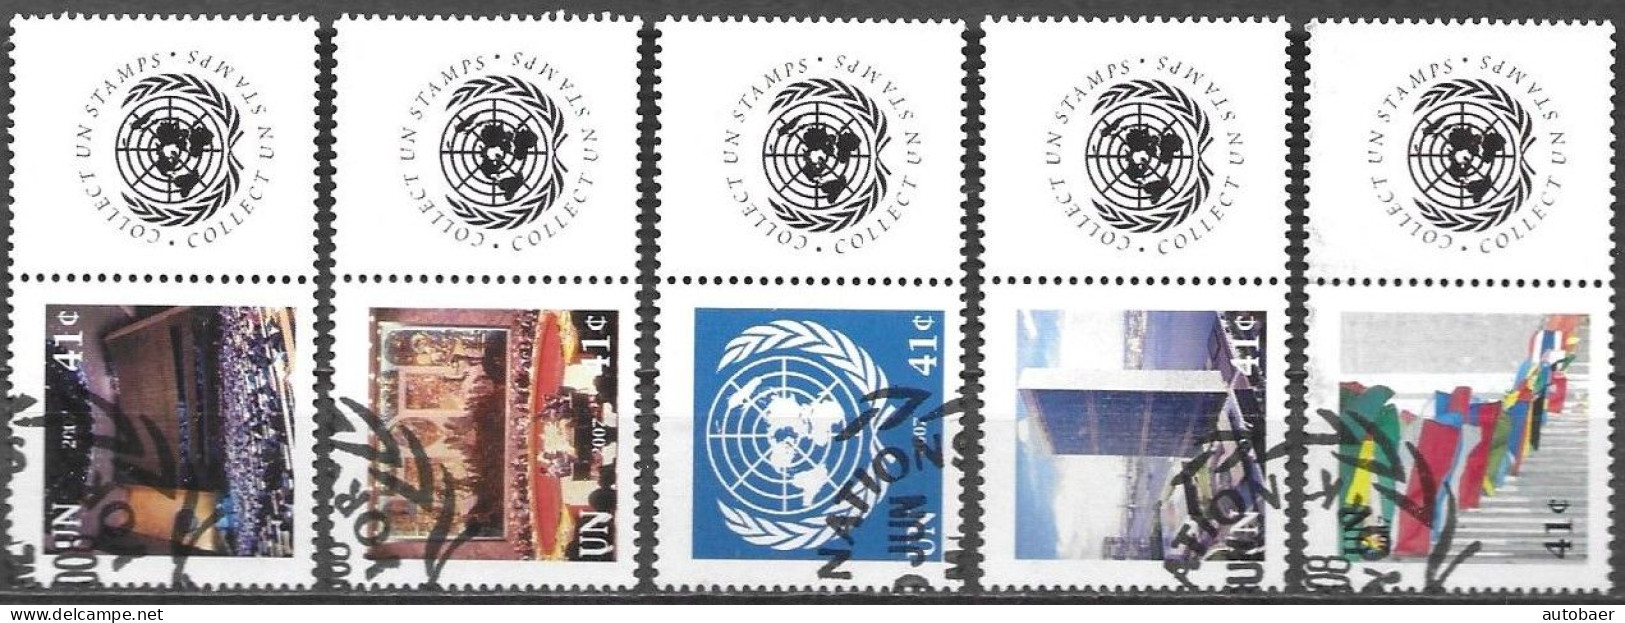 United Nations UNO UN Vereinte Nationen New York 2007 Greetings Mi. No. 1057-61 Label Used Cancelled Oblitéré - Gebruikt